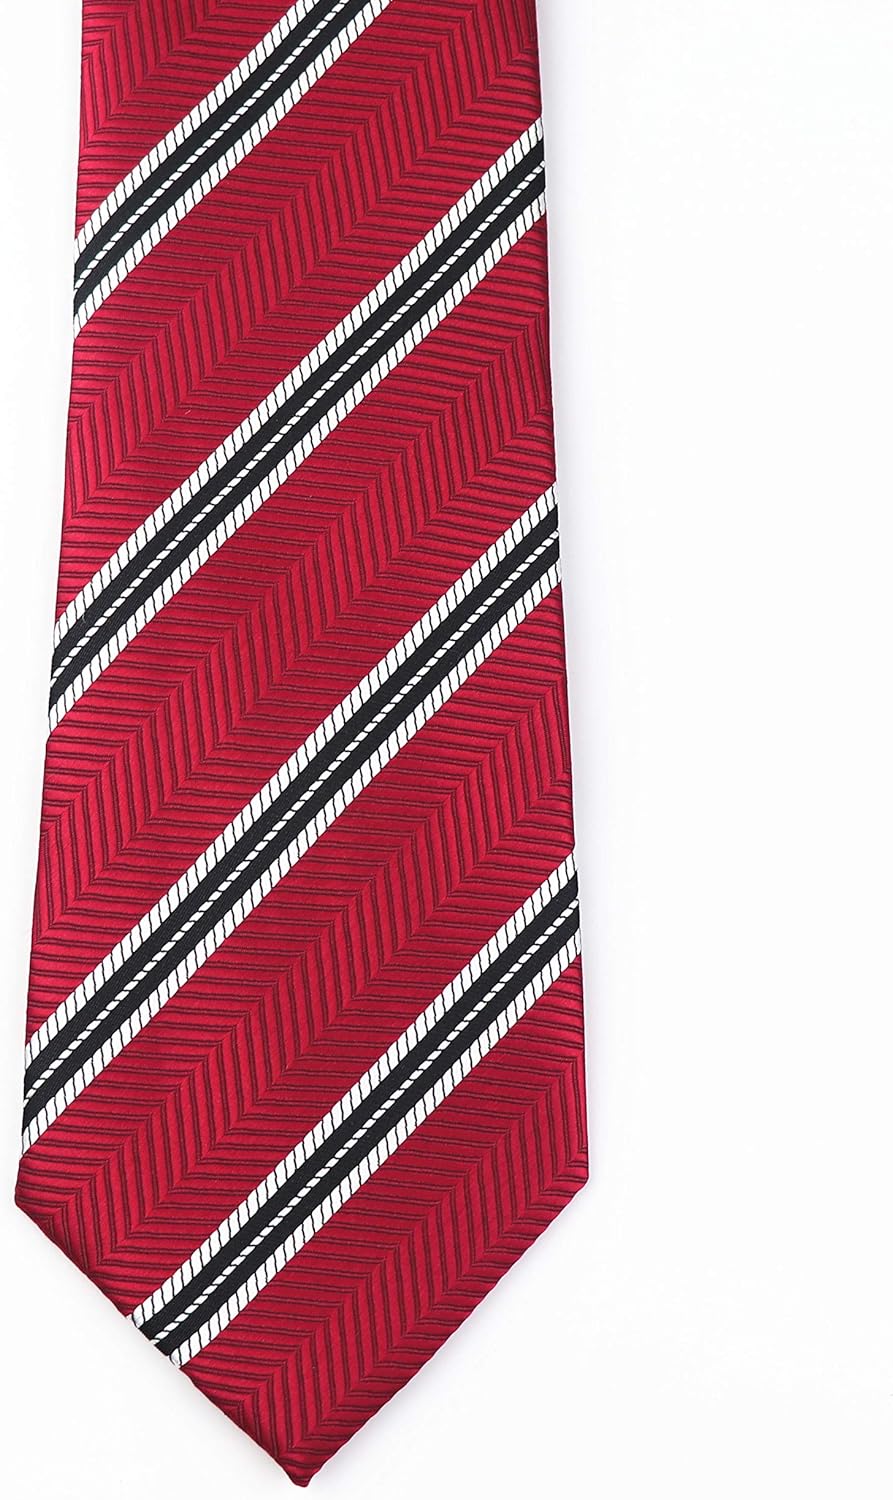 Men's Classic Stripe Red and Black Jacquard Woven Necktie